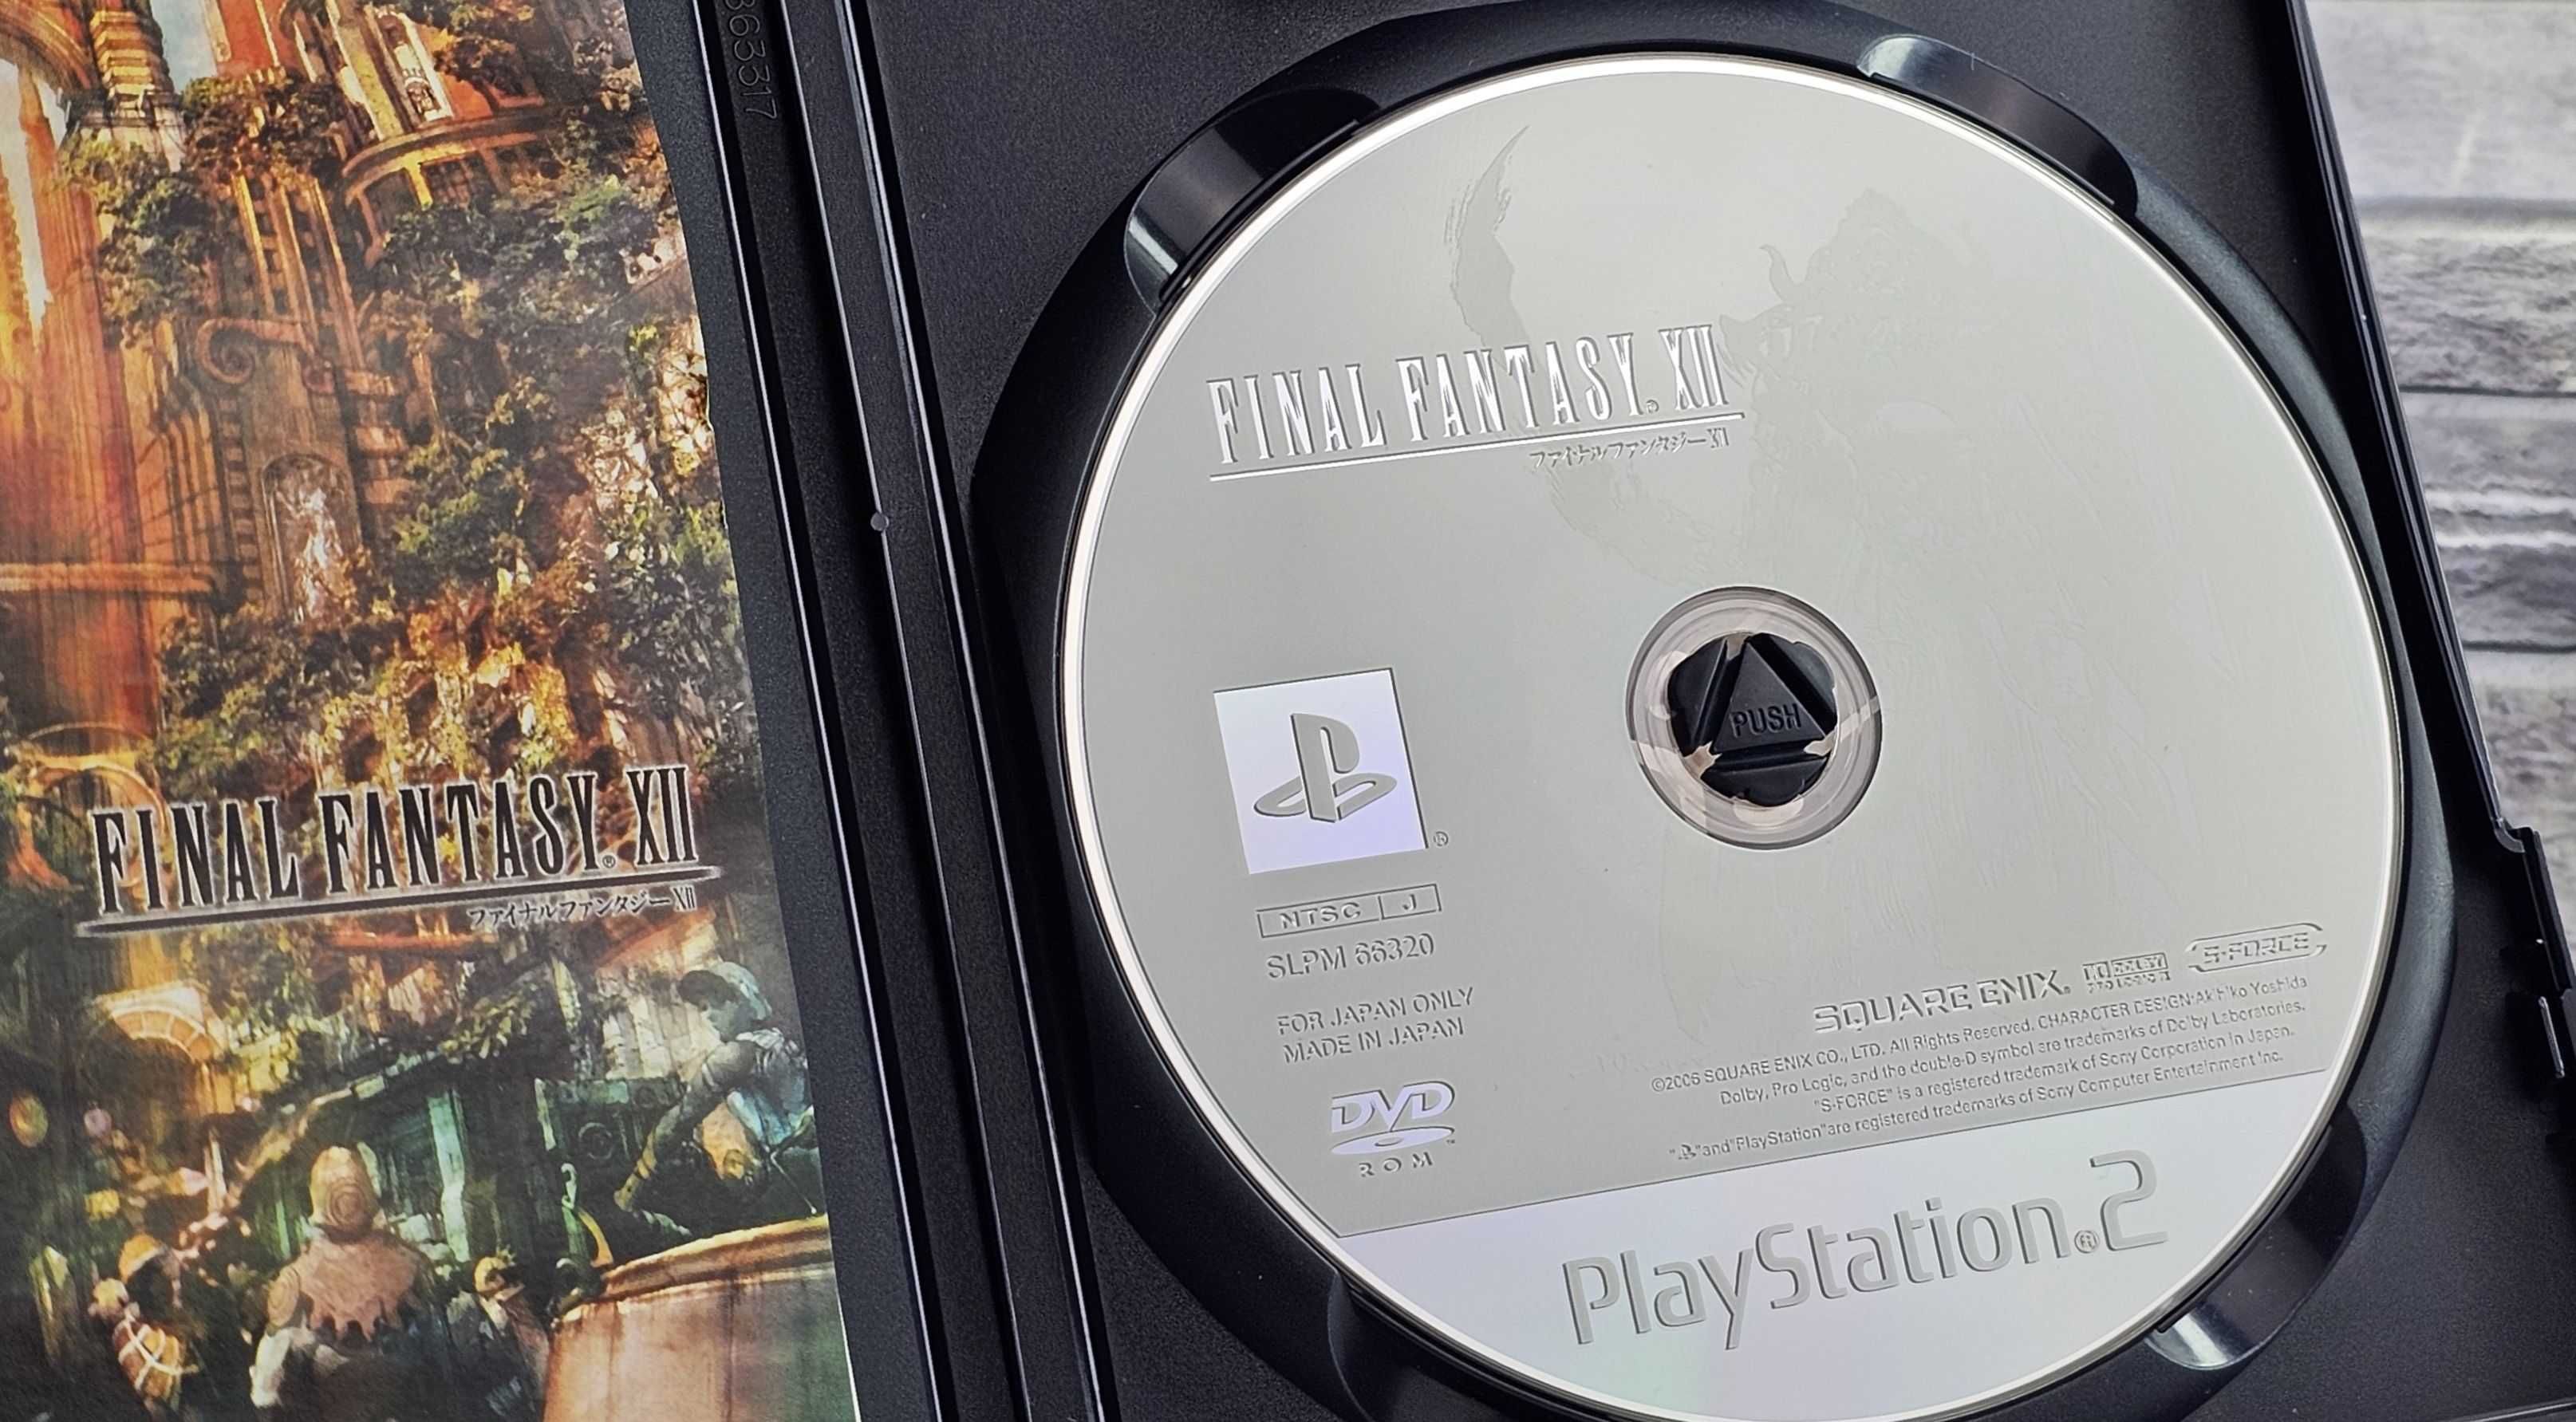 Seria Final Fantasy X, X-2, XII na Playstation 2